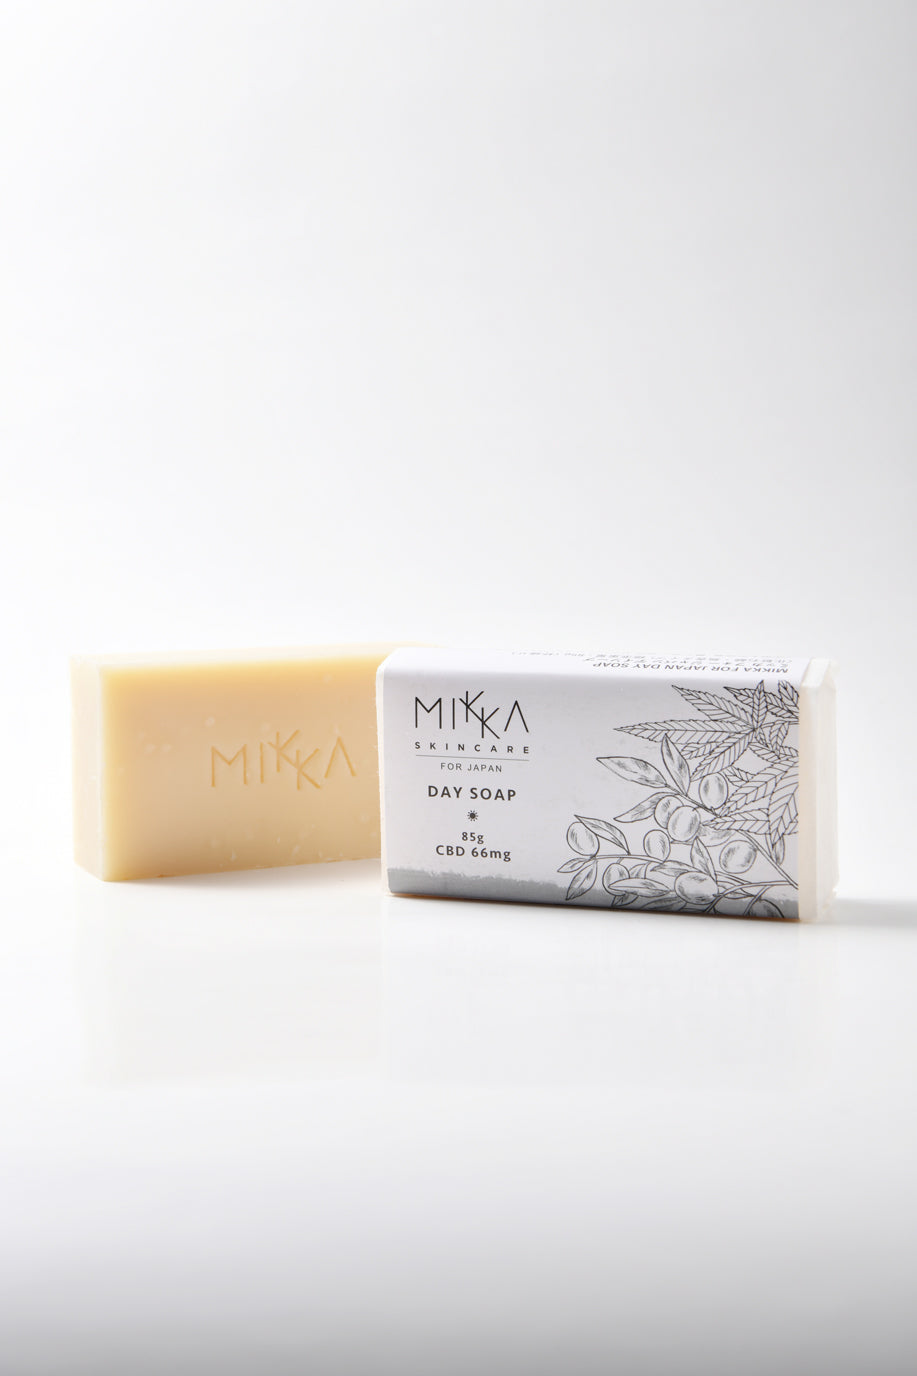 MIKKA 美容液 CBD 300mg - 基礎化粧品